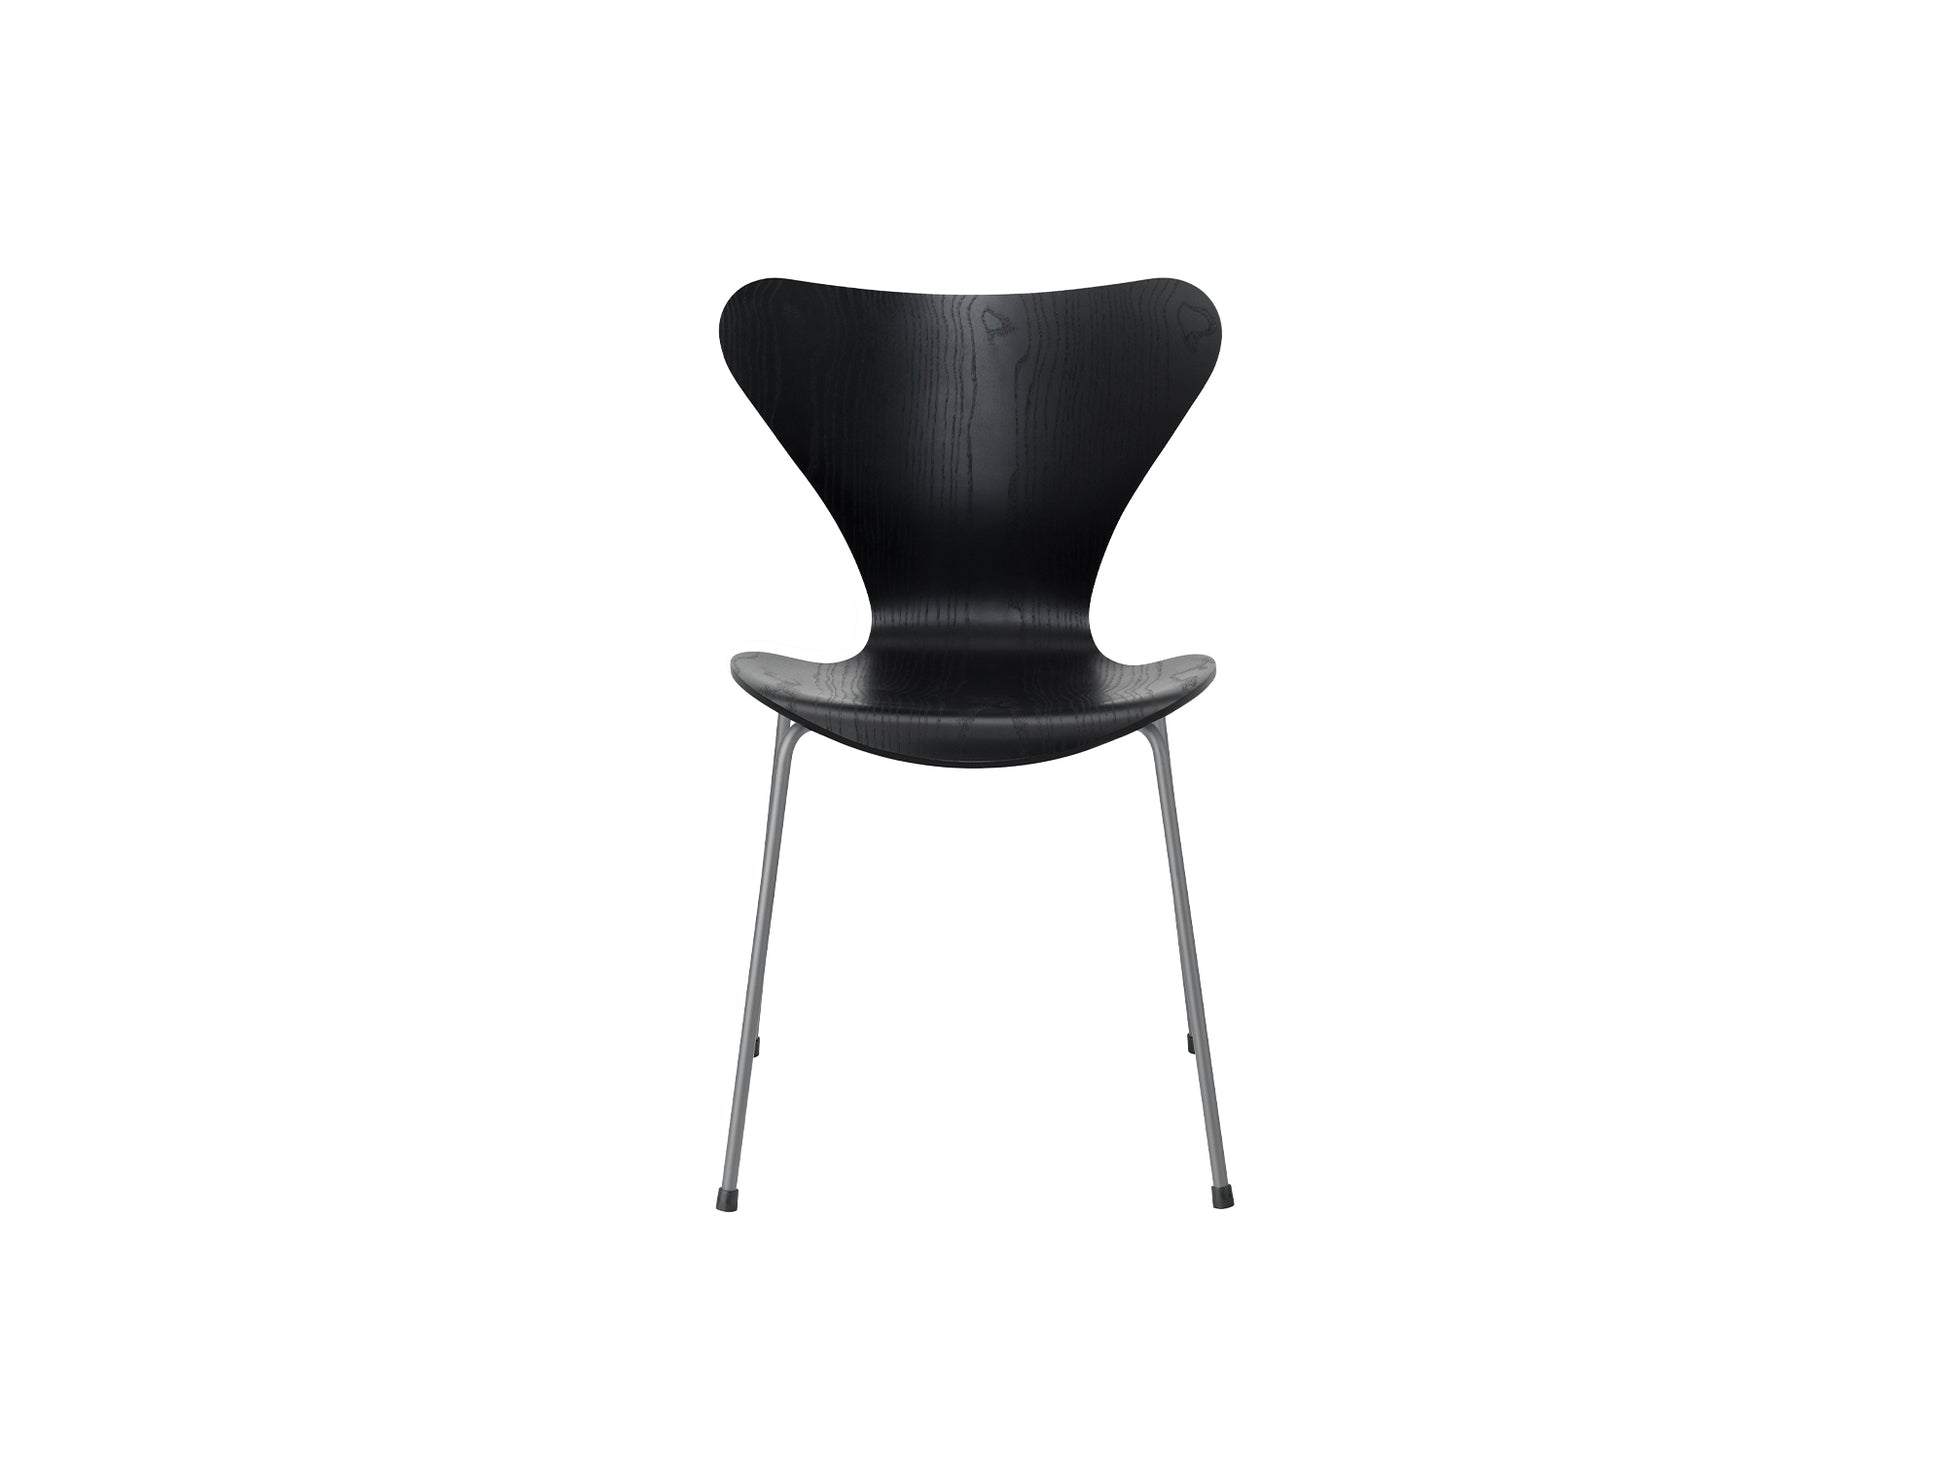 Series 7™ 3107 Dining Chair by Fritz Hansen - Black Coloured Ash Veneer Shell / Silver Grey Steel